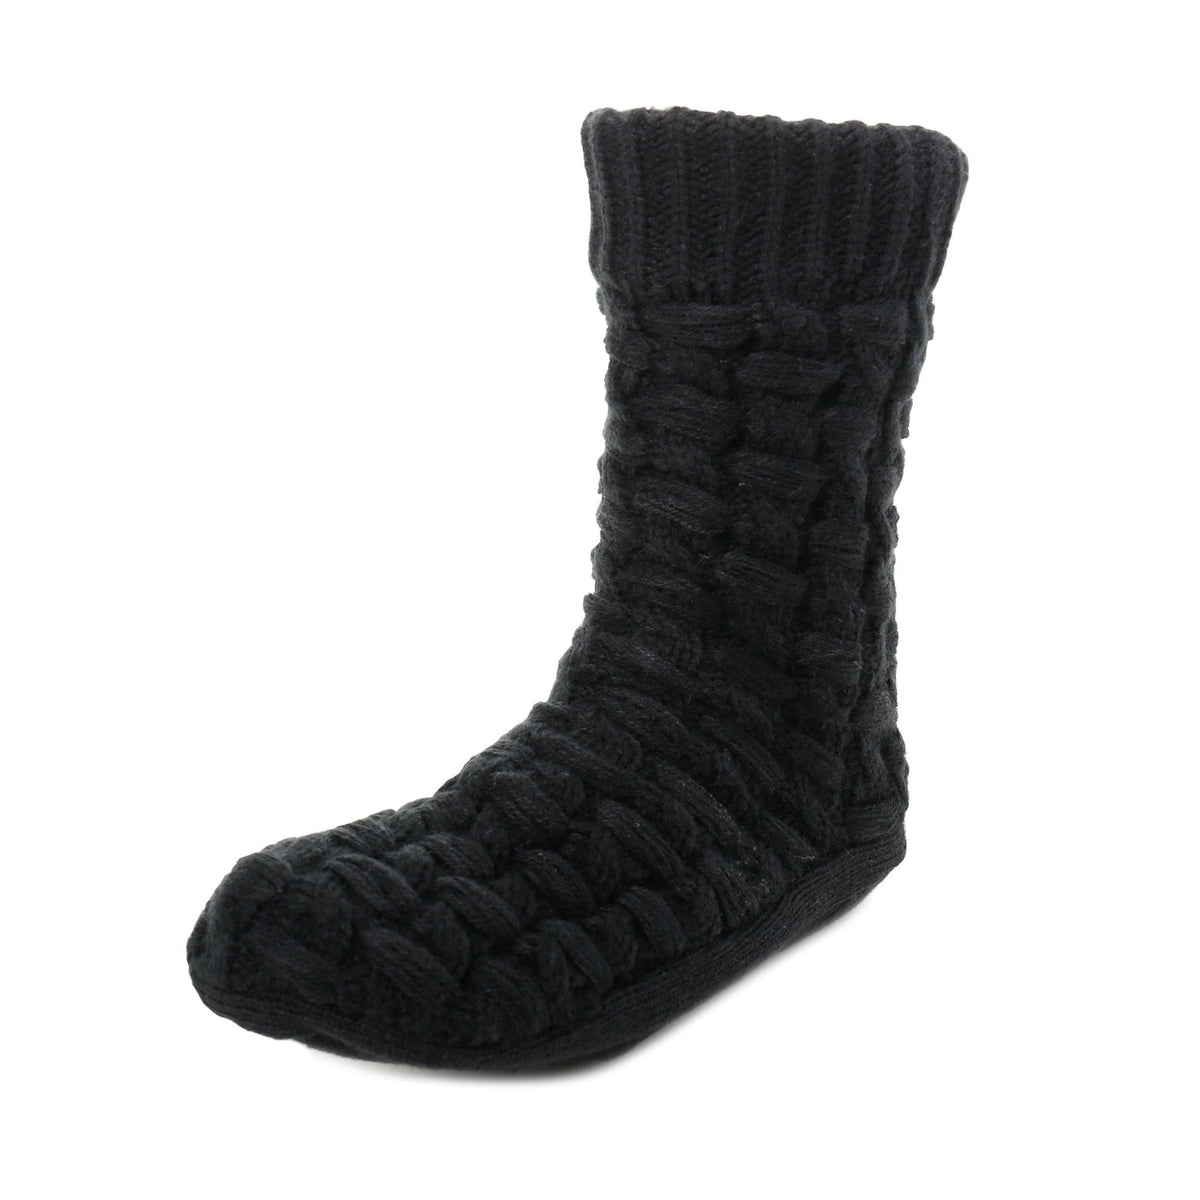 Men's Thick Basket Weave No-Skid Slipper Socks - Black